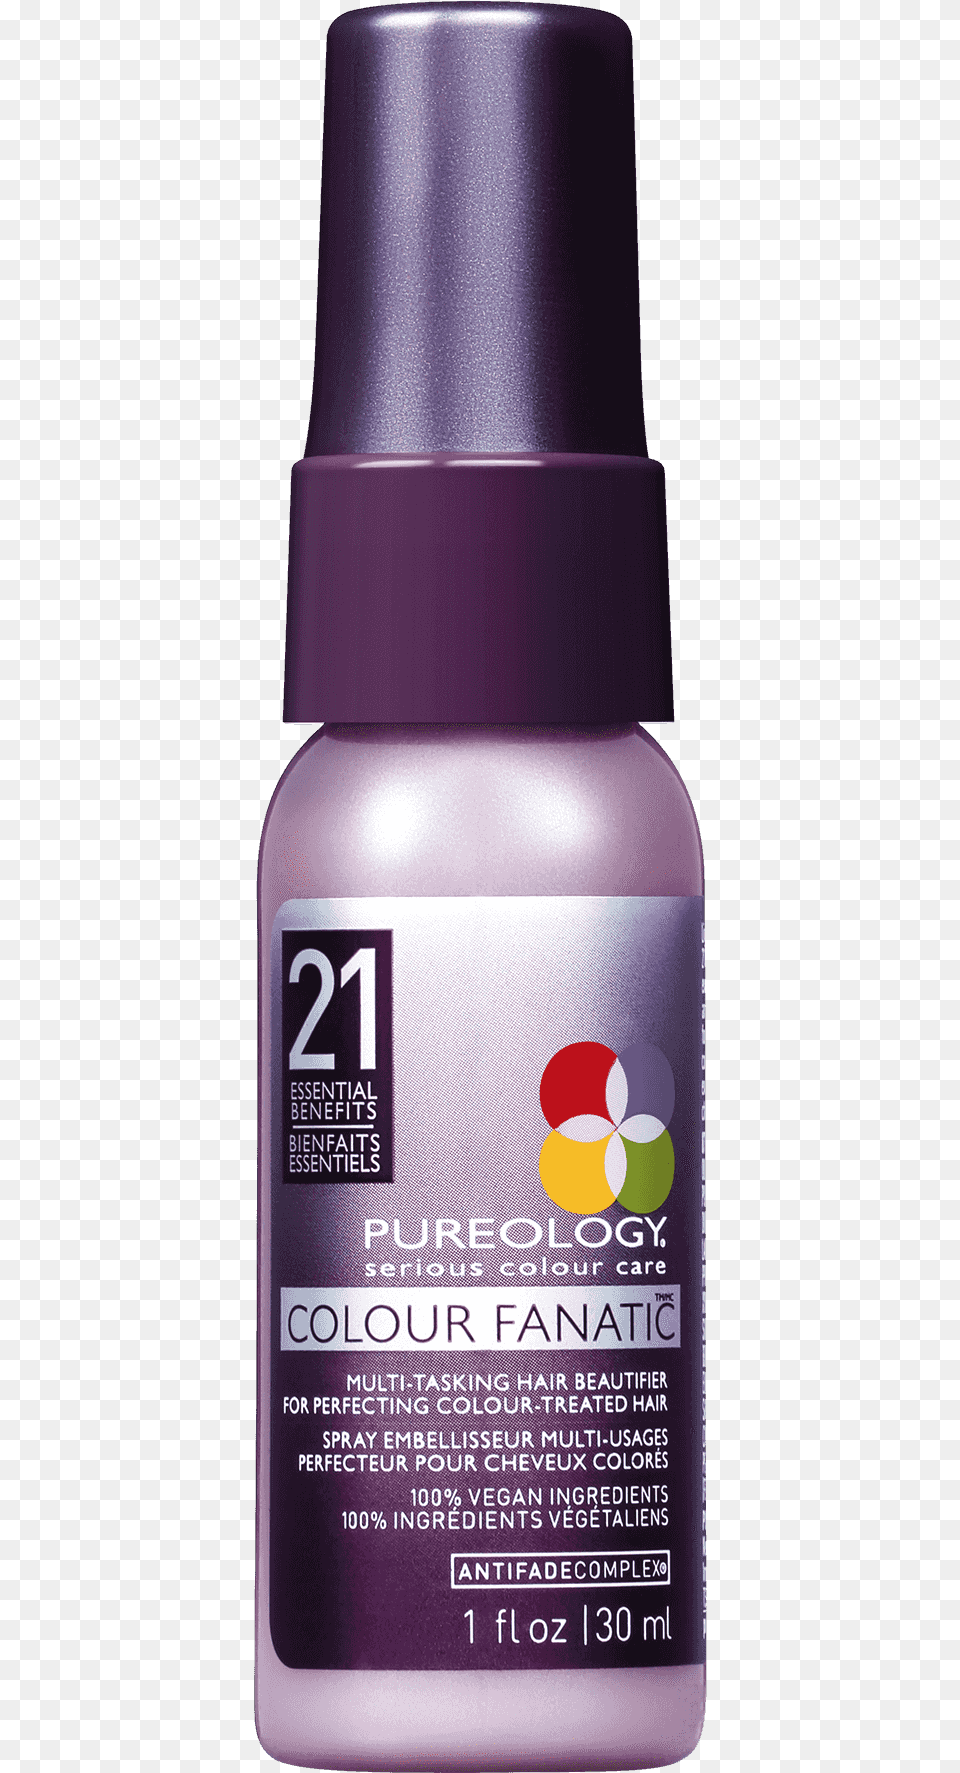 Pureology Colour Fanatic 30 Ml, Cosmetics, Bottle, Perfume Png Image